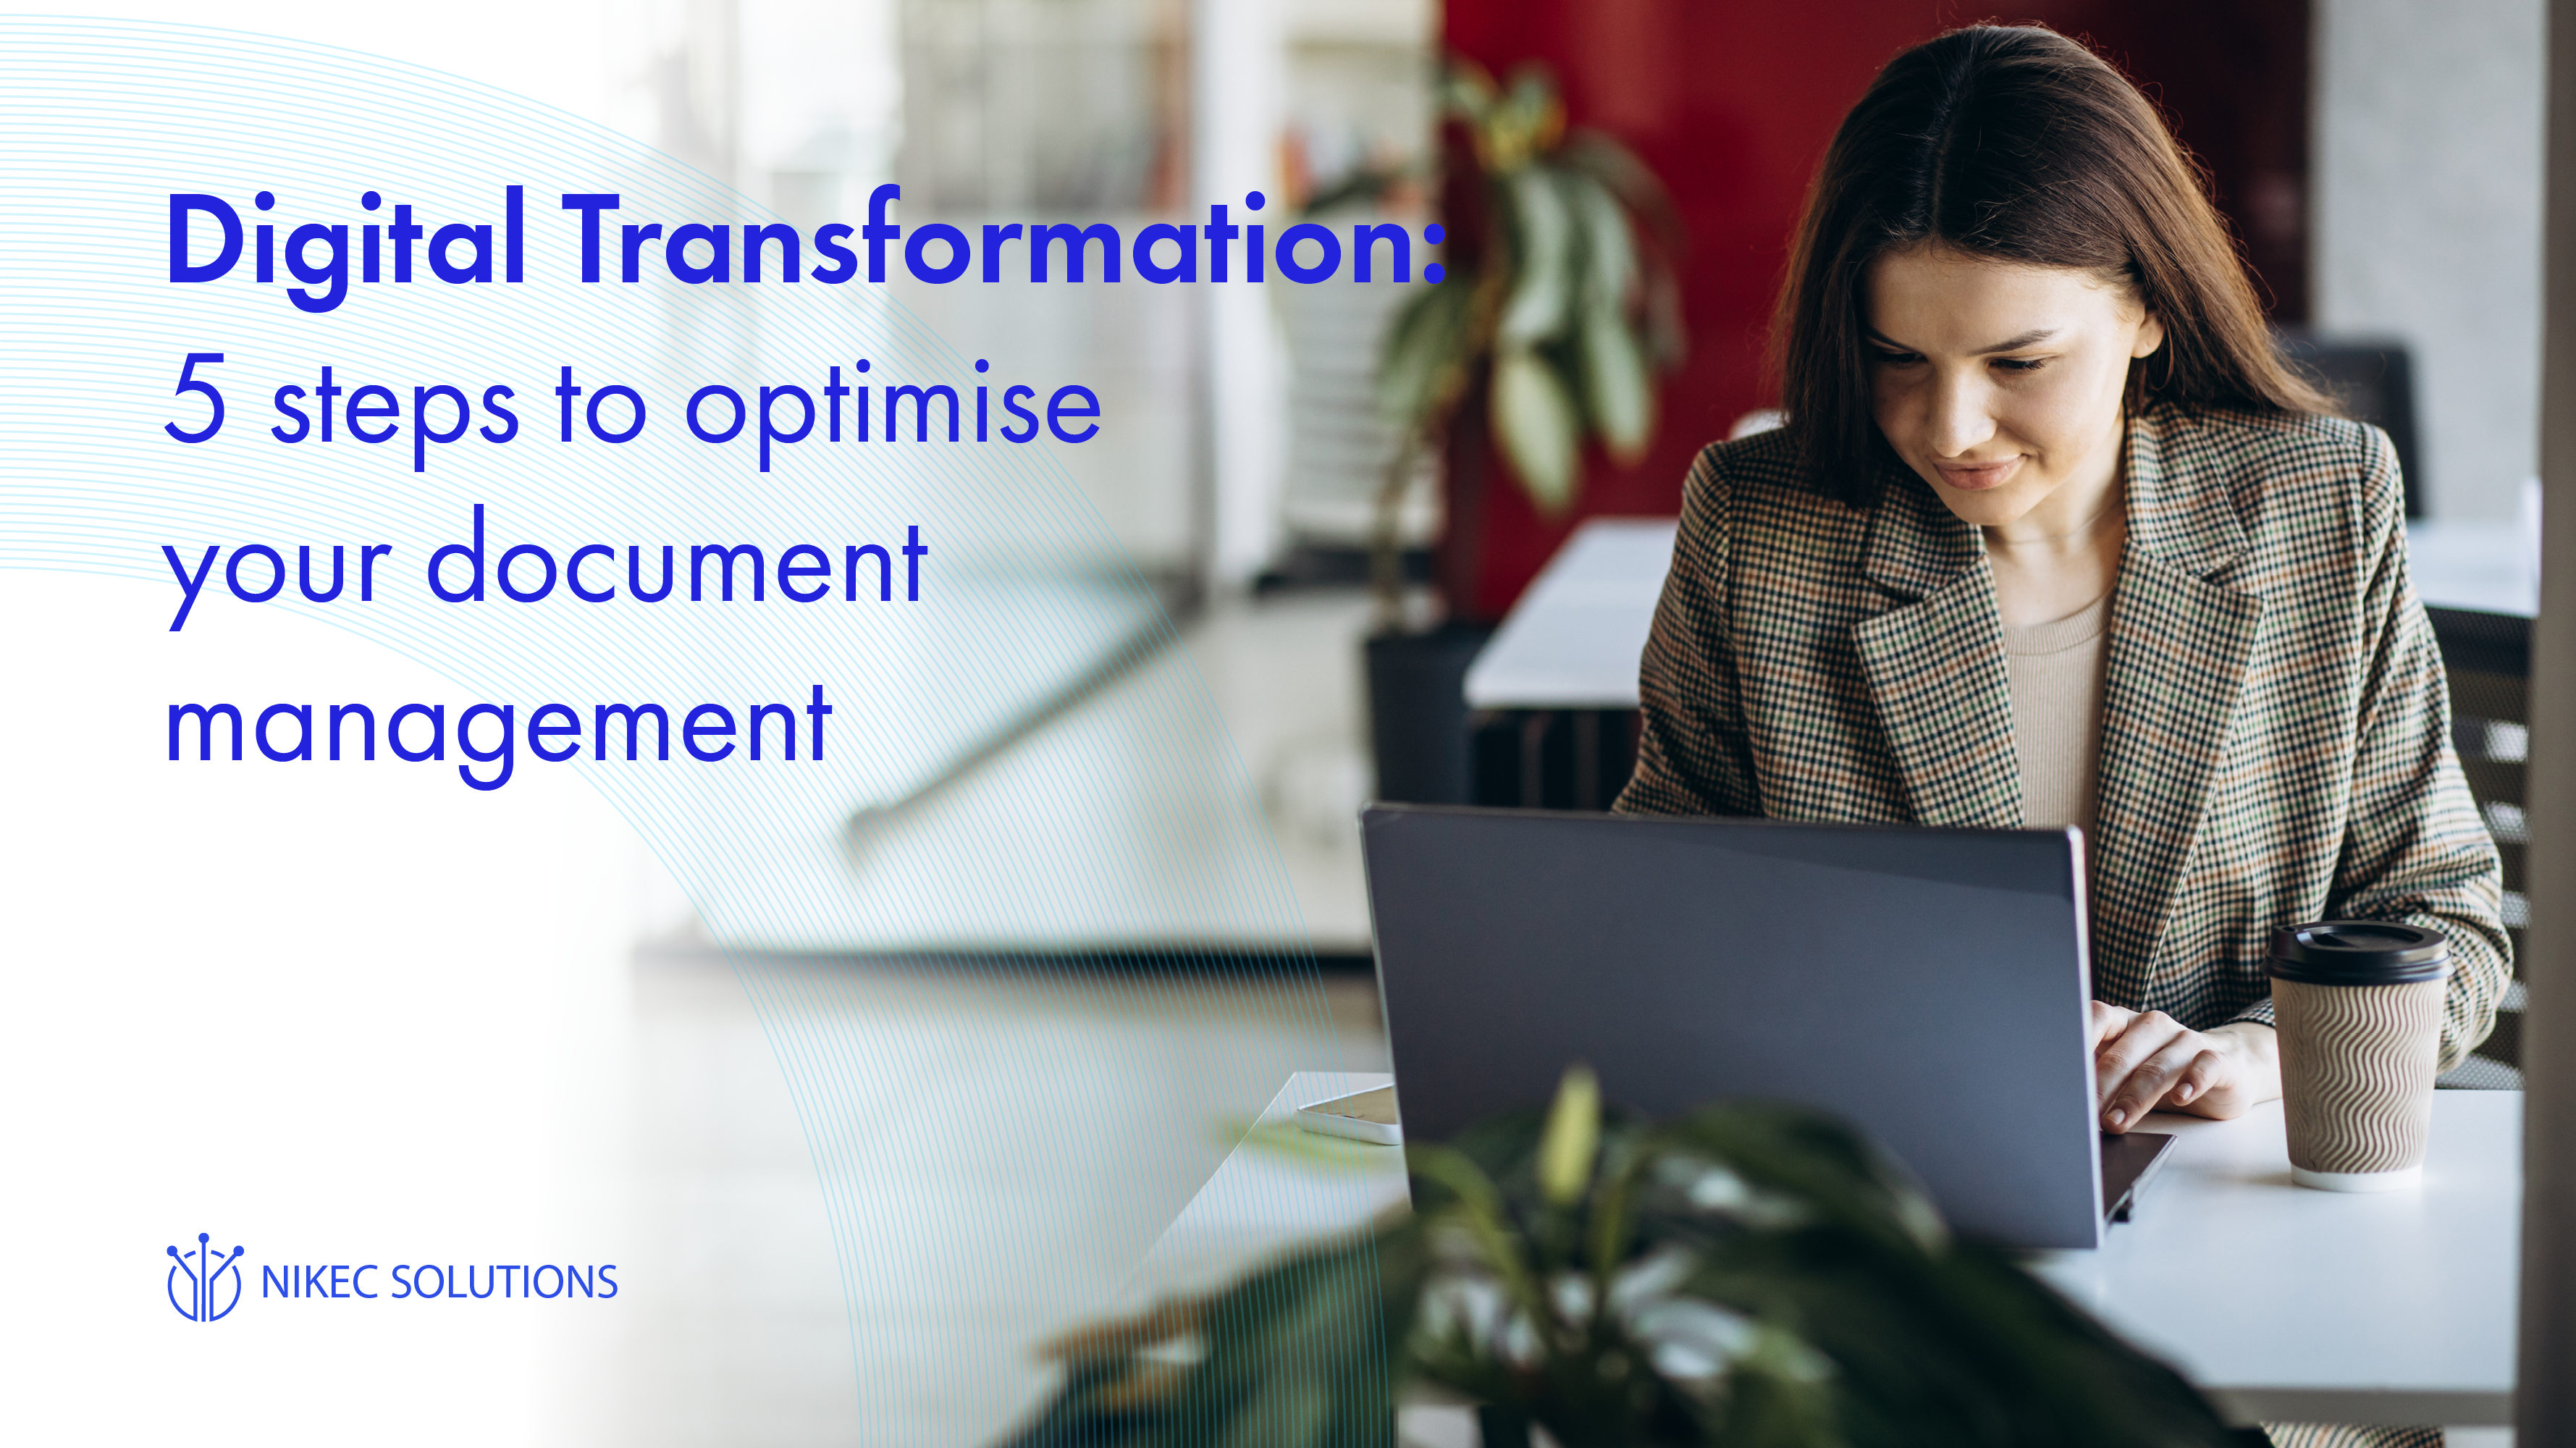 Digital Transformation: 5 steps to optimise your document management